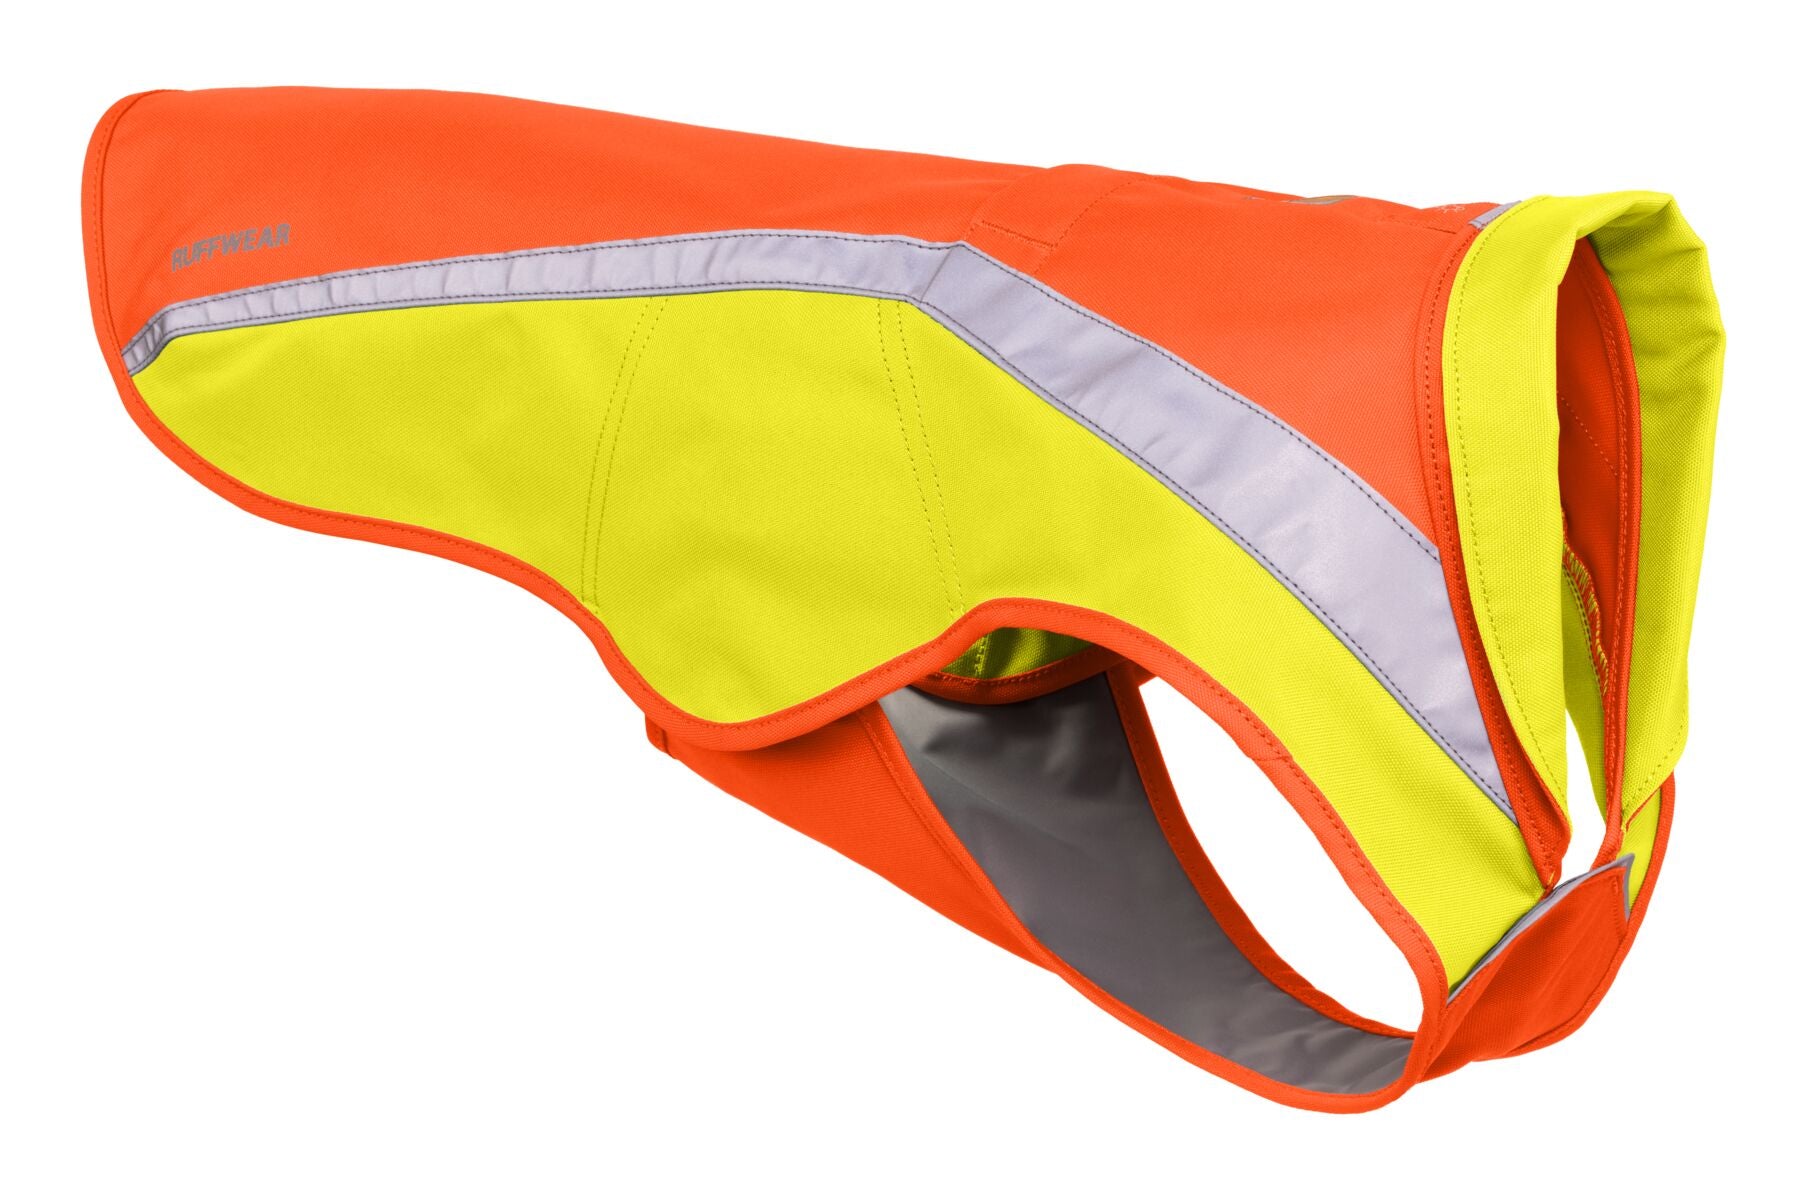 Lumenglow® Chaleco de Seguridad Reflejante para Perros- Naranja (Blaze Orange)- Ruffwear